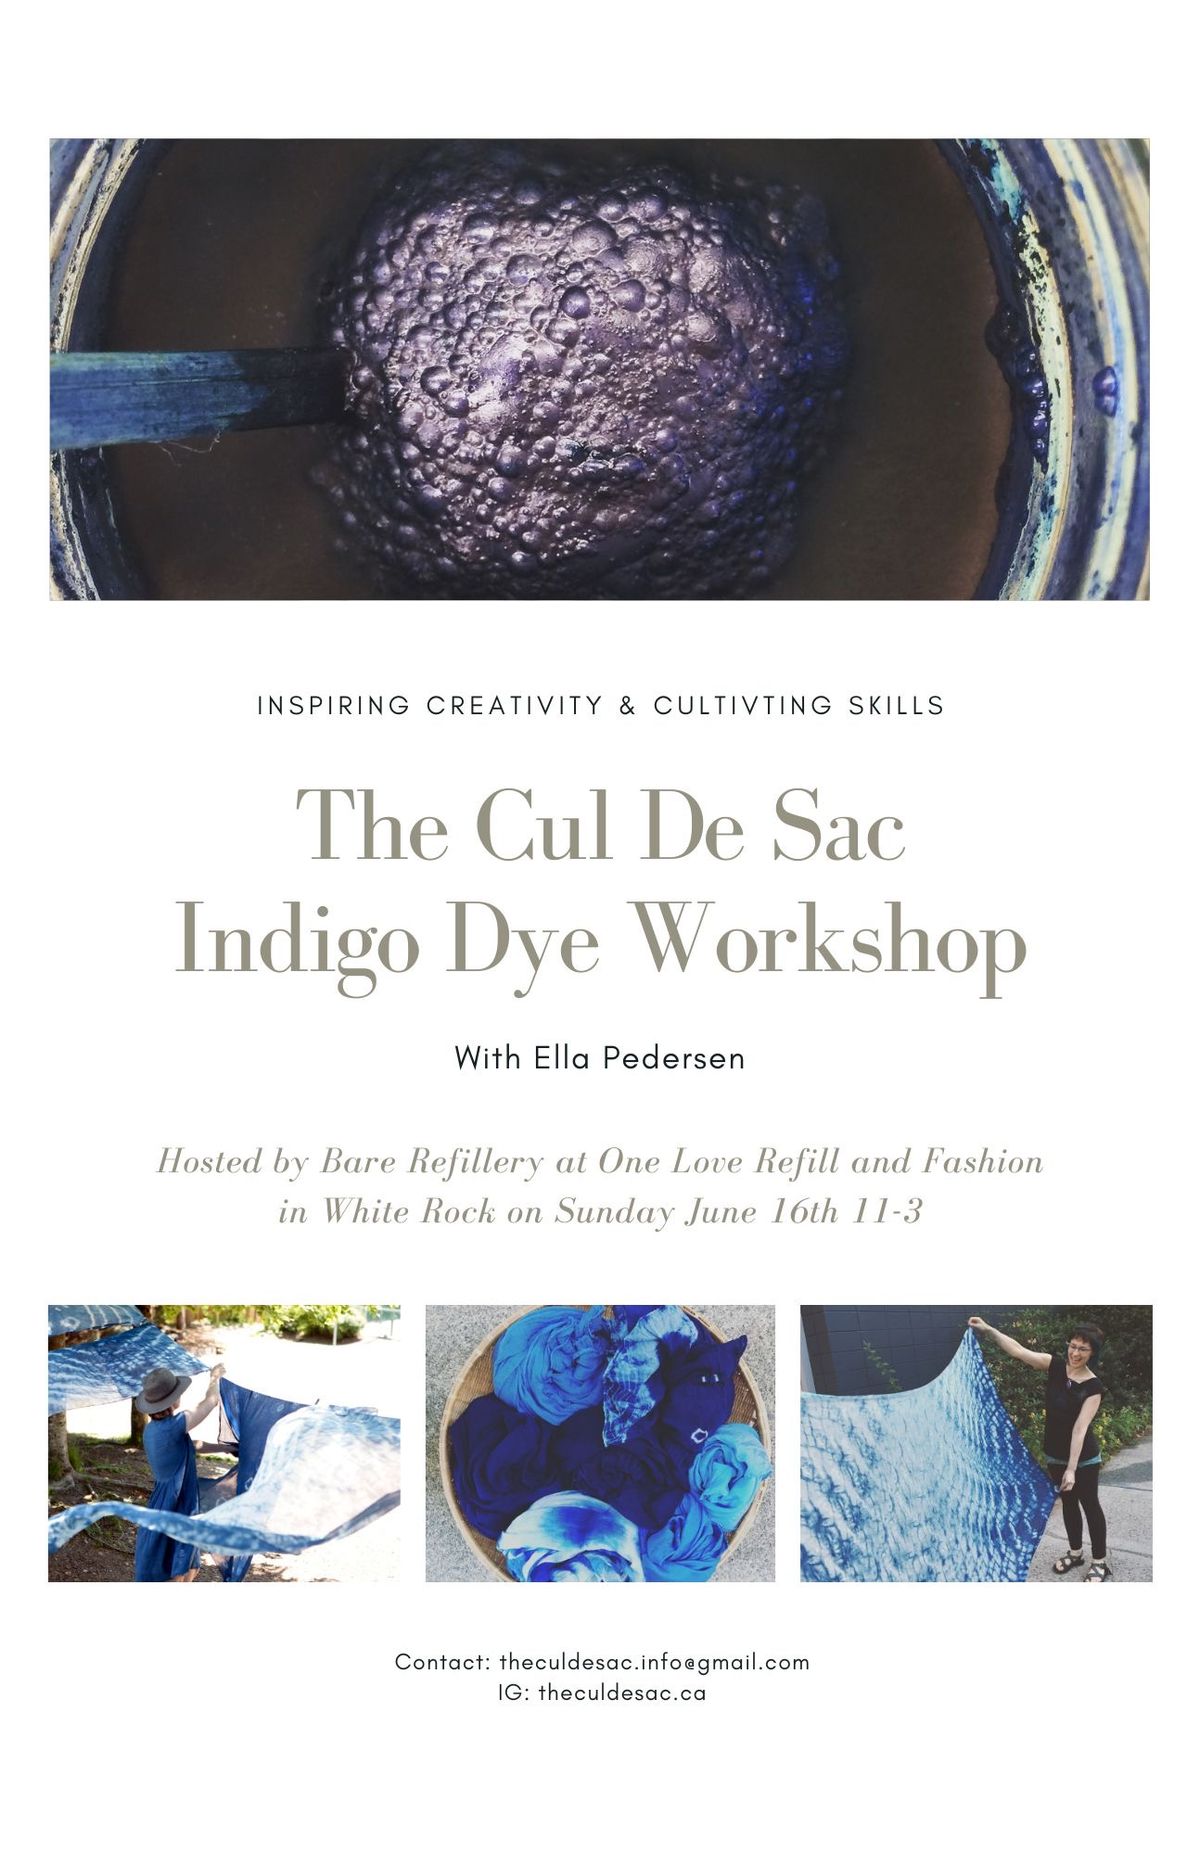 Indigo Dye Workshop with The Cul De Sac\/Ella Pedersen